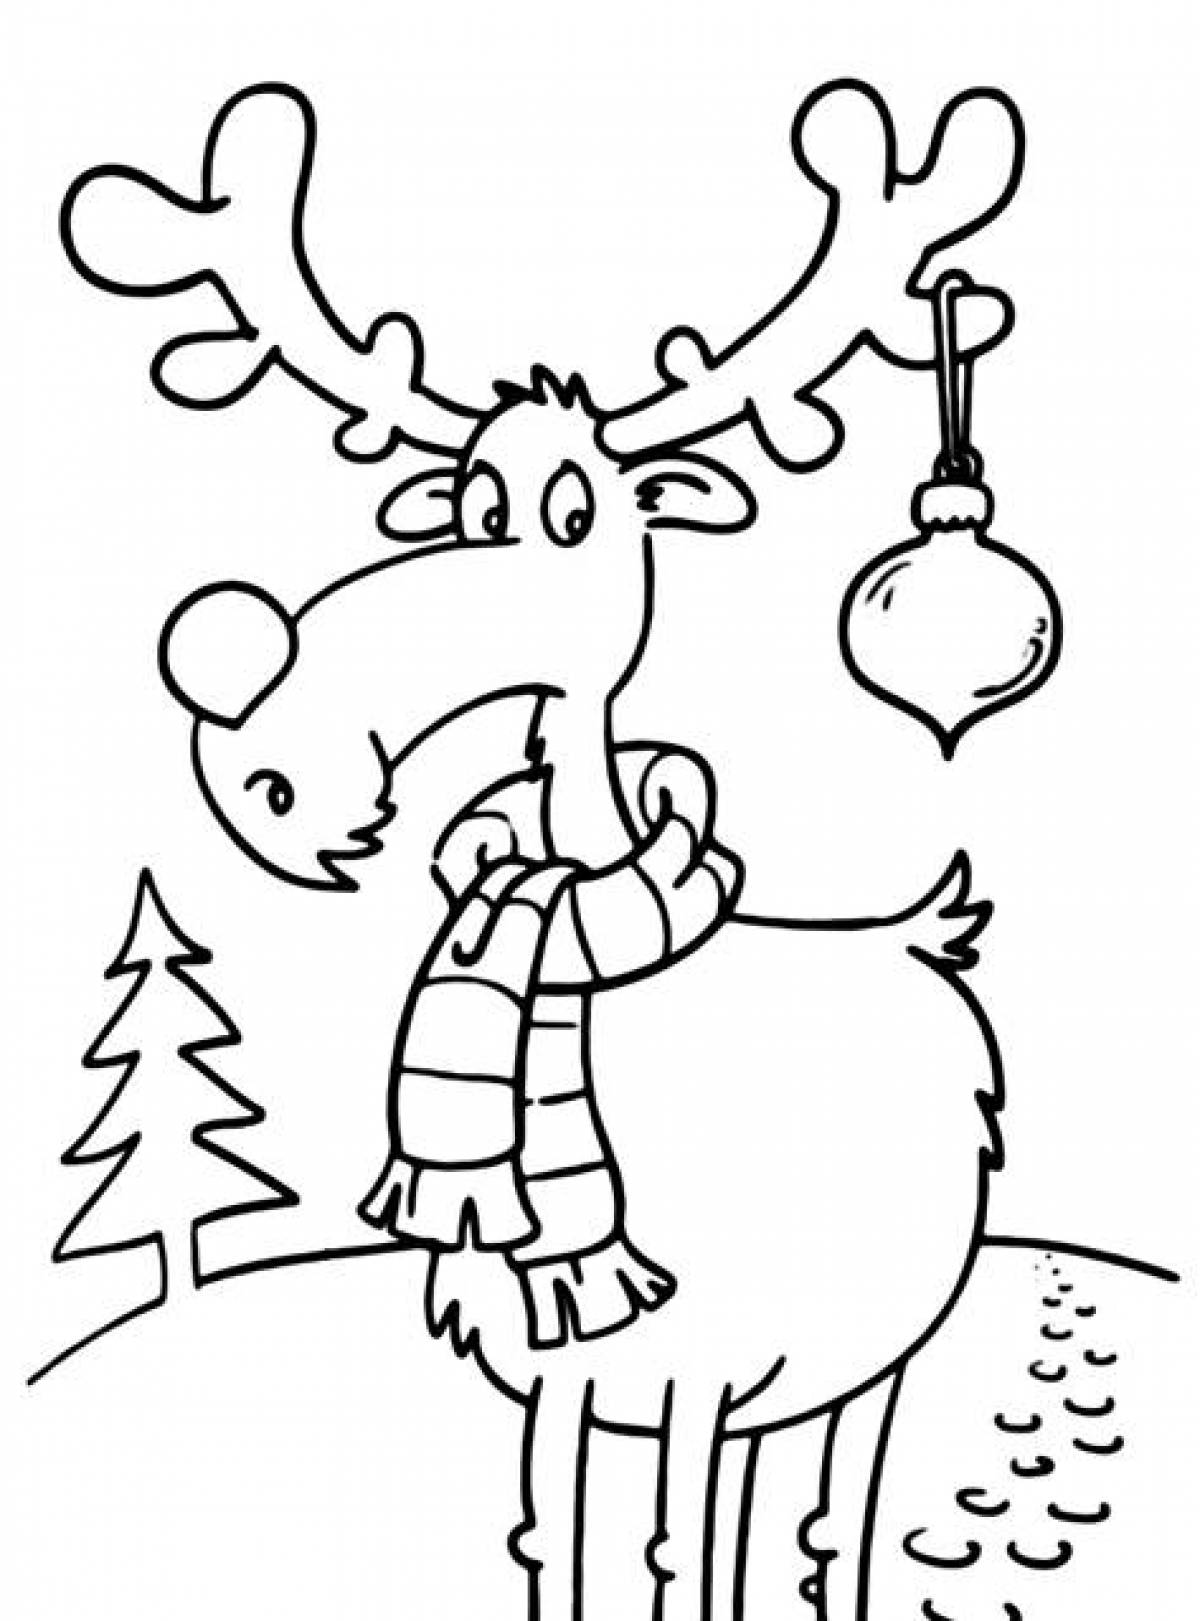 Fancy Christmas reindeer coloring page